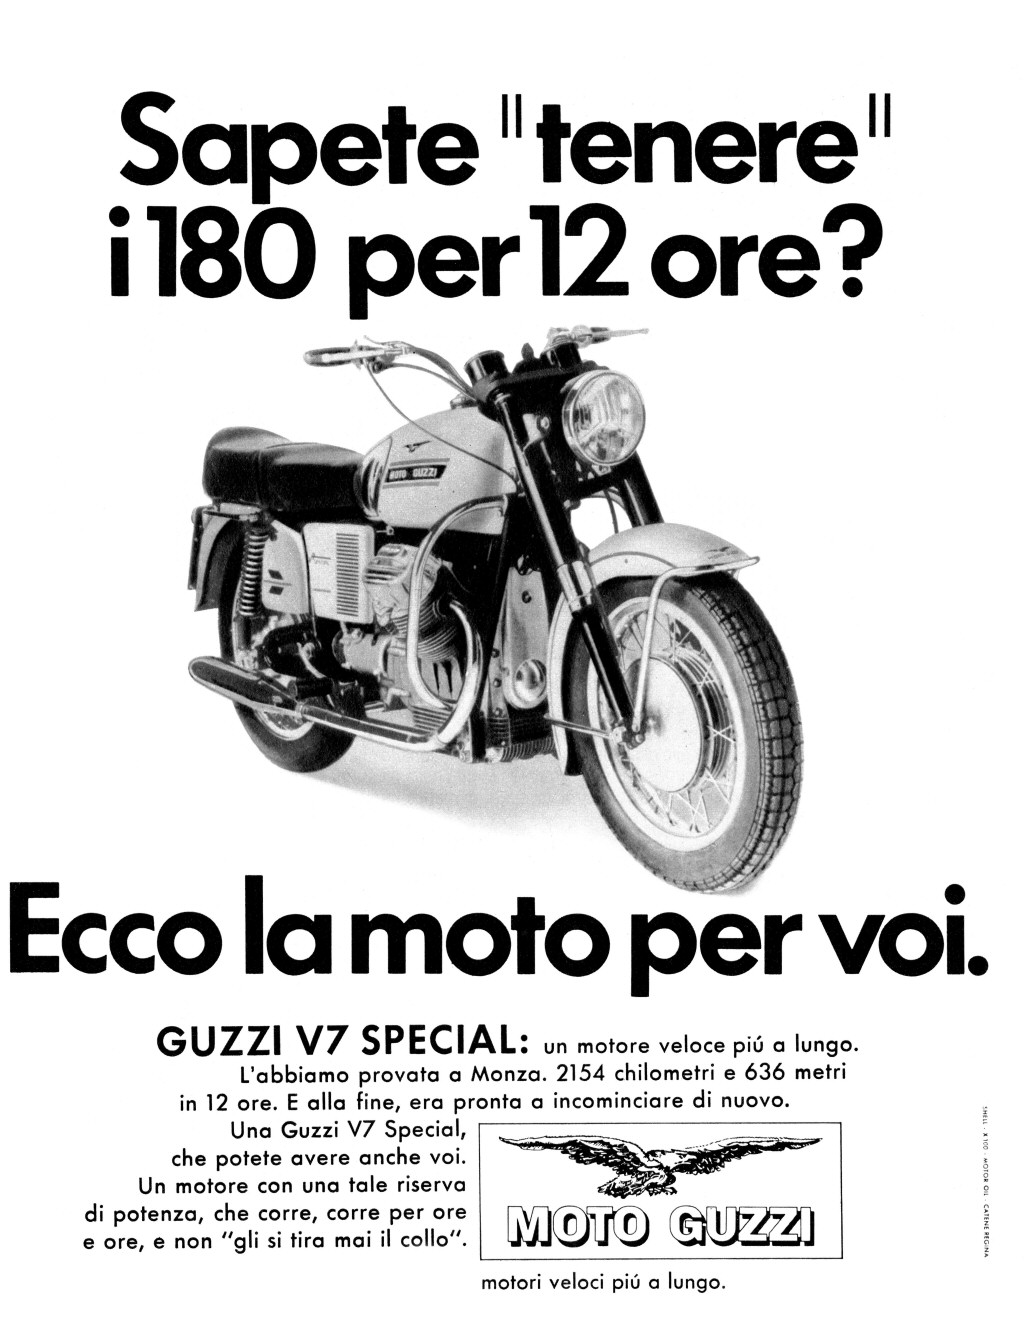 Moto Guzzi advertisement: 180 KPH for 12 hours.